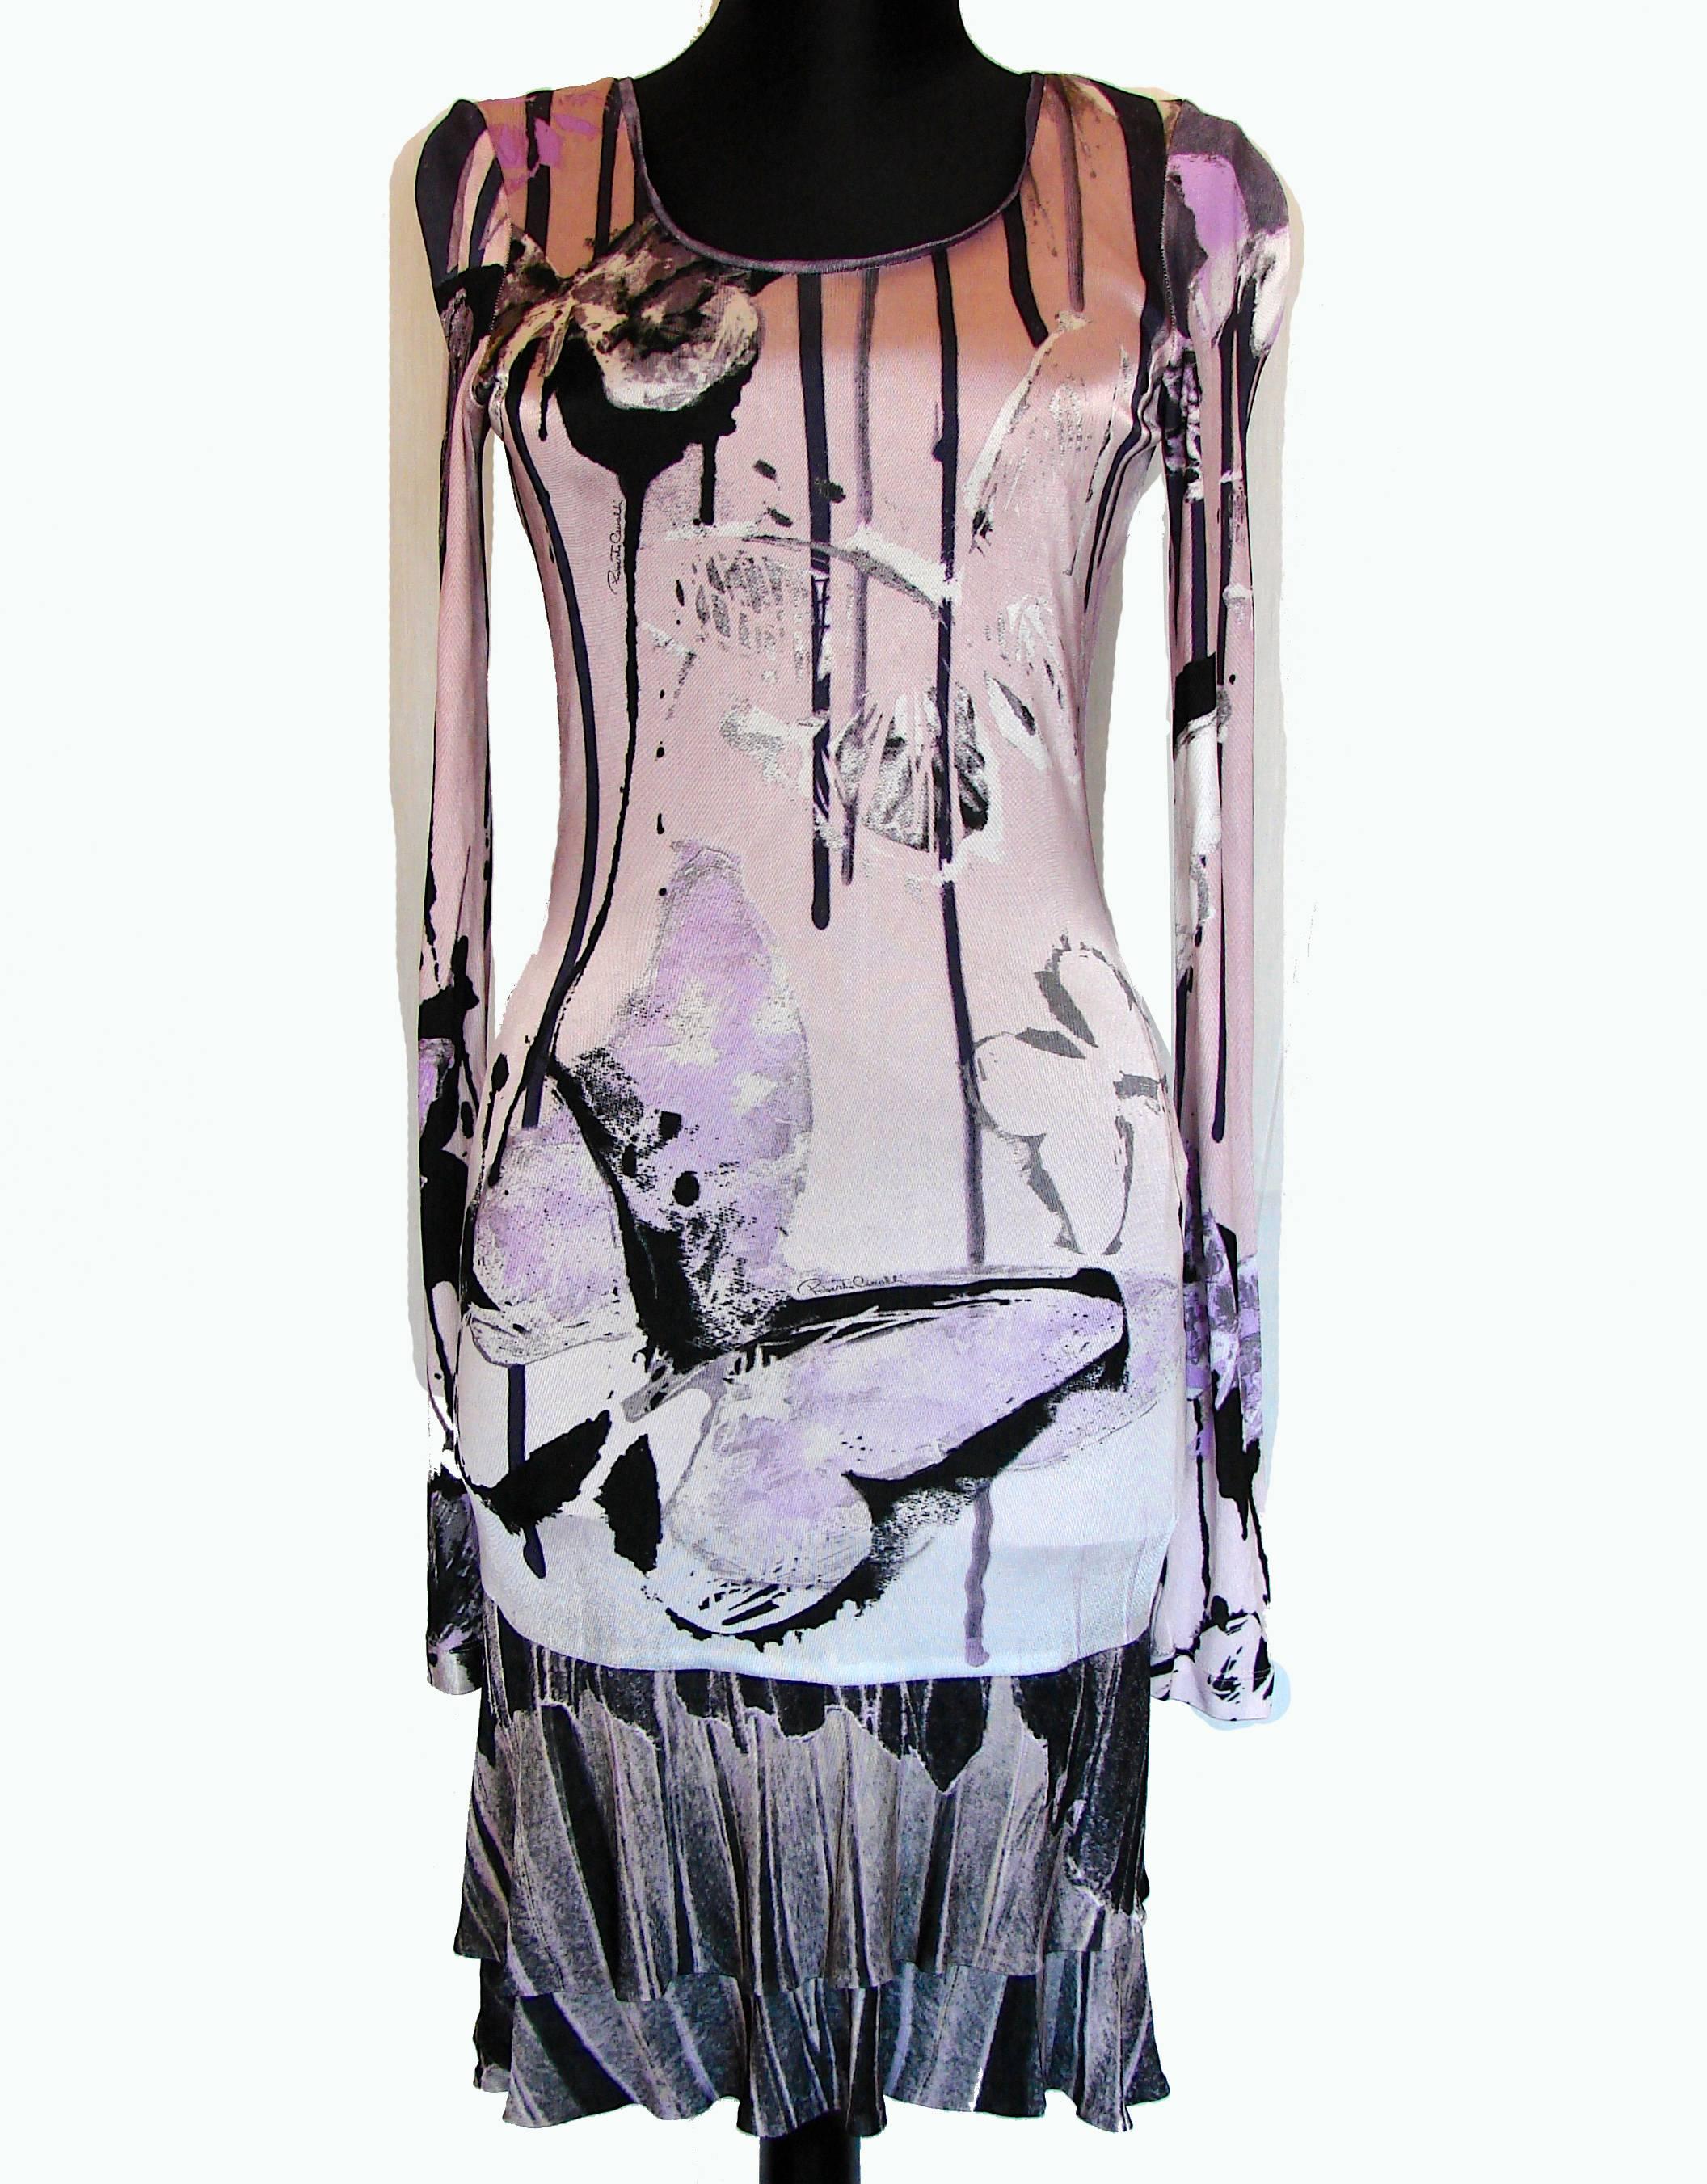 Roberto Cavalli Vibrant Butterfly Print Dress Bodycon Tiered Hem Size 36 2